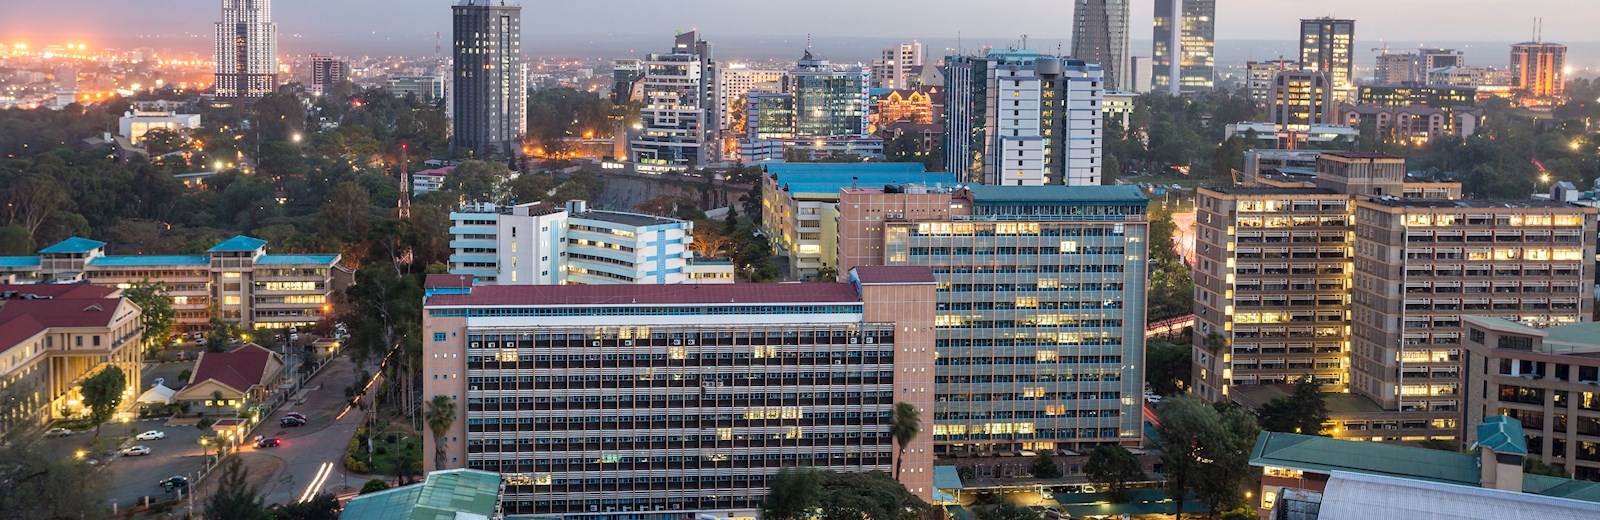 Kenya Skyline - Mace Group